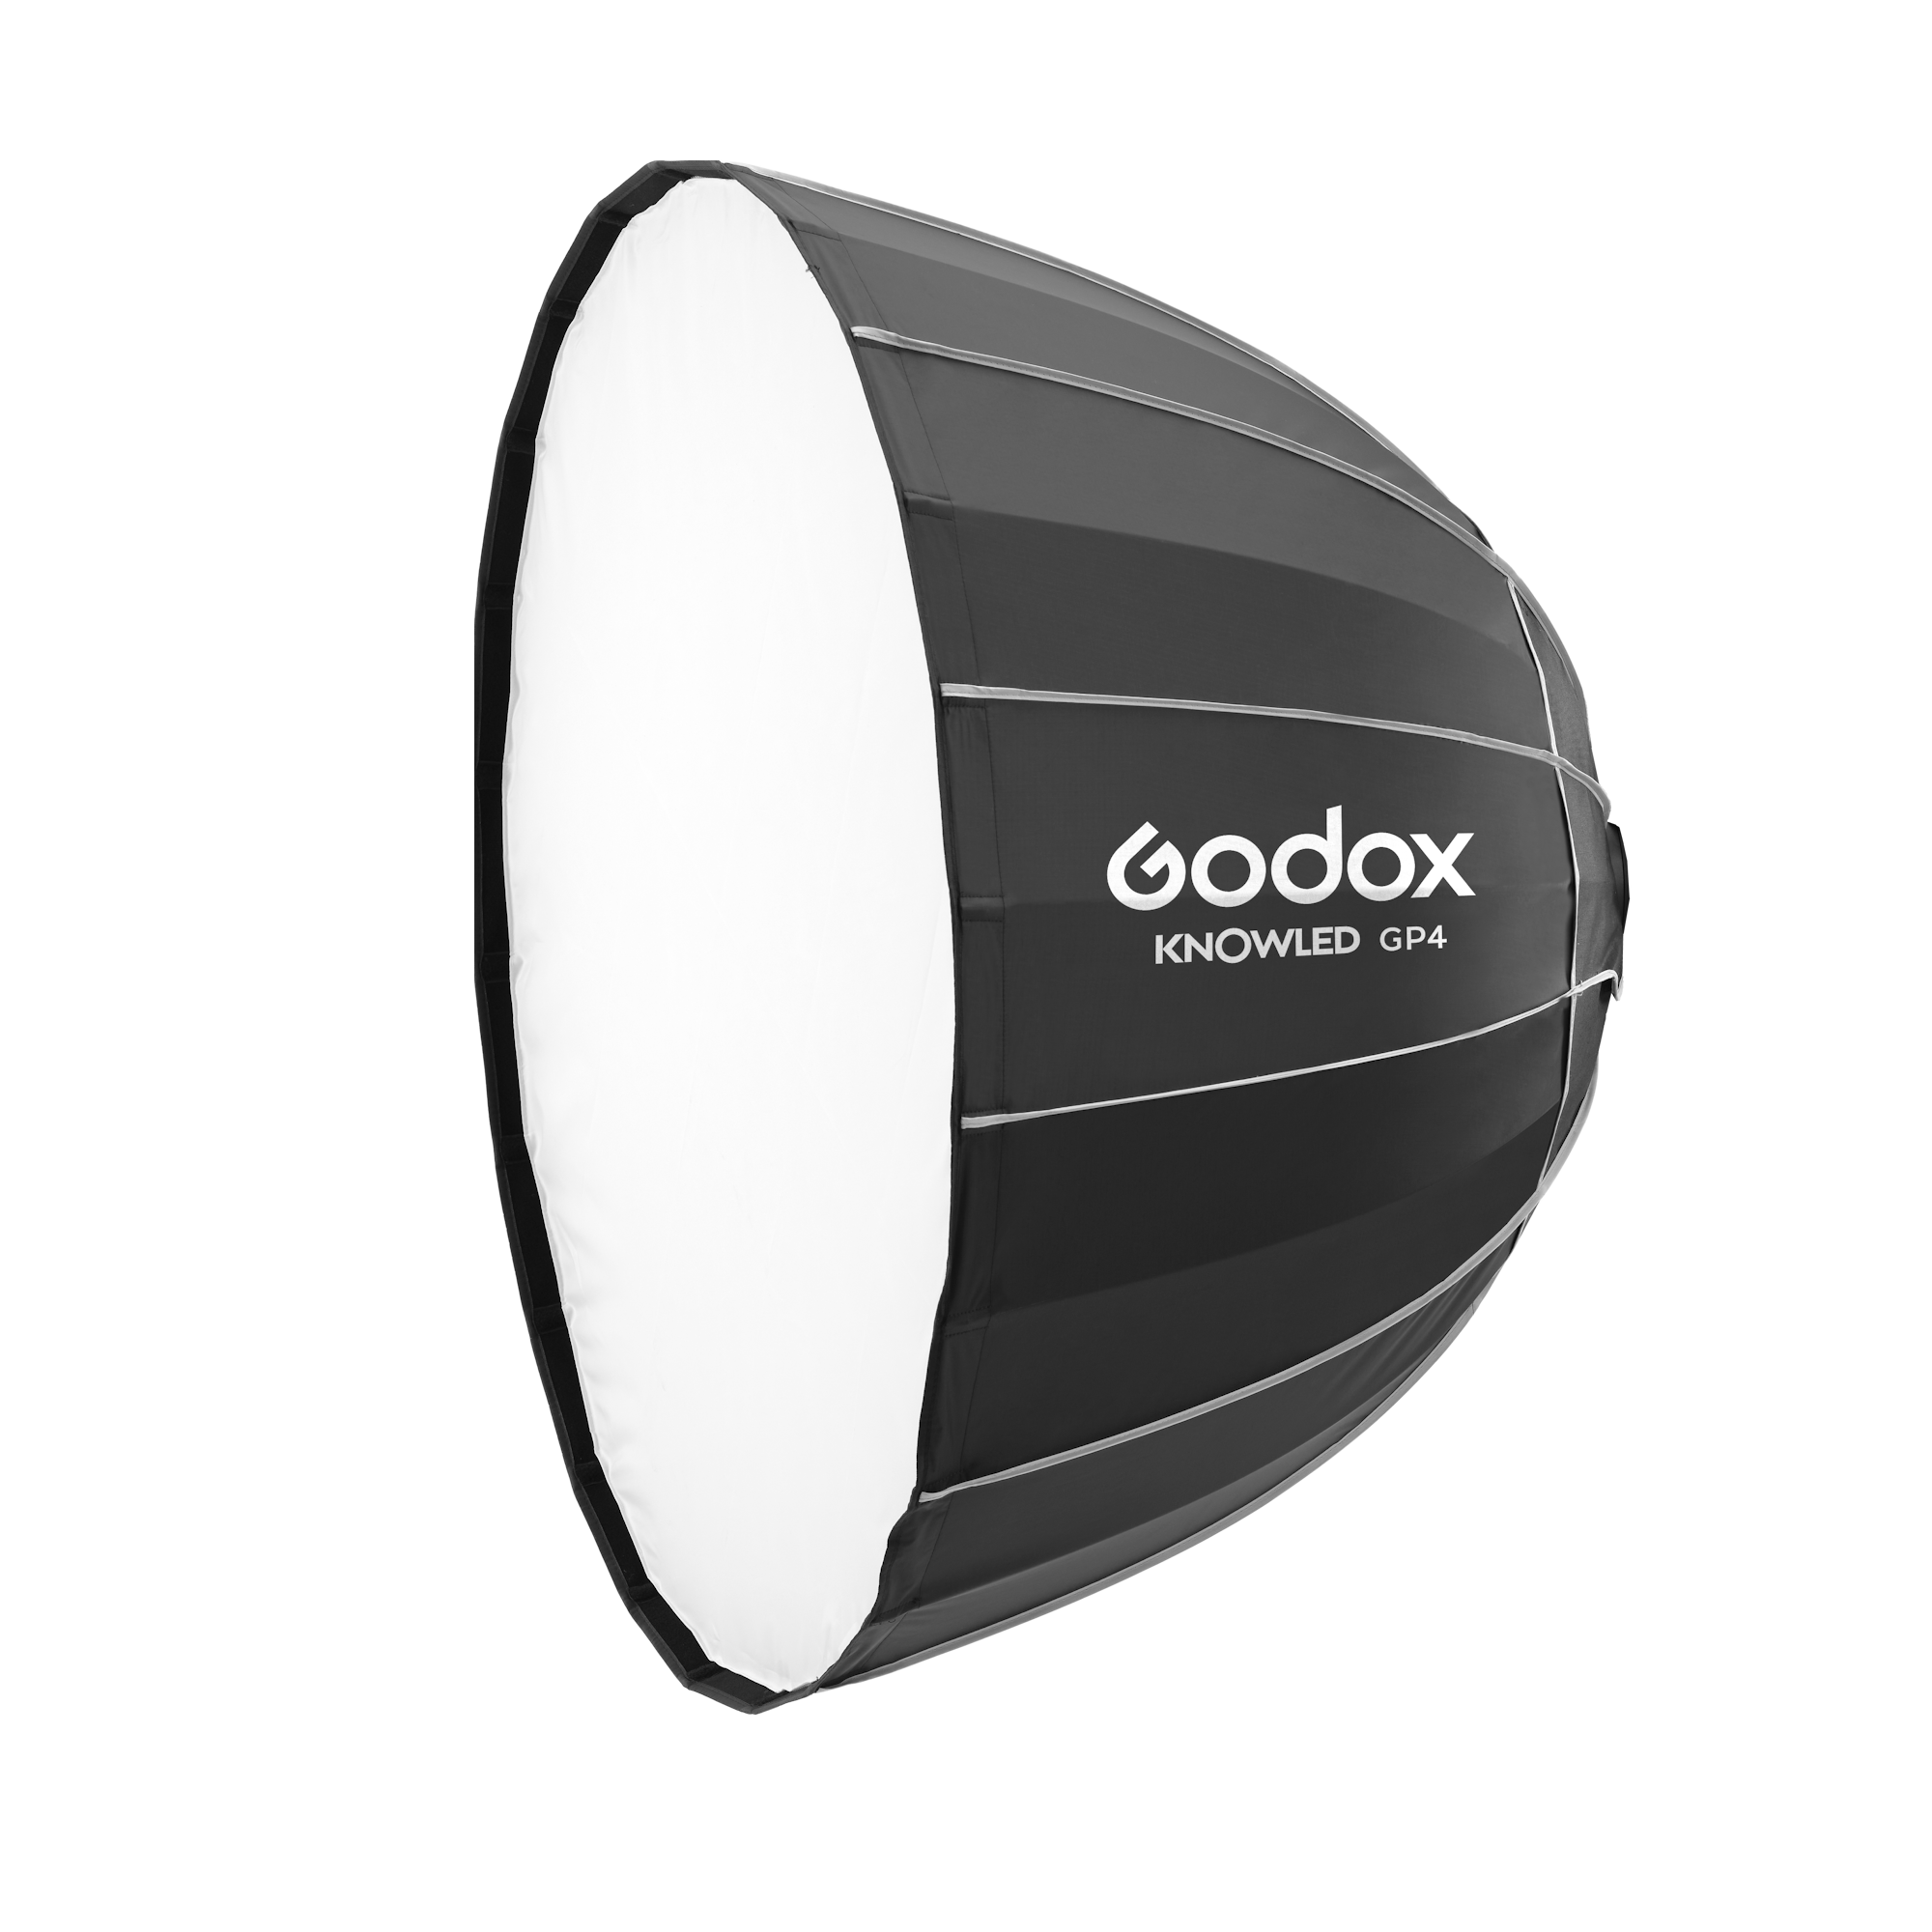 картинка Софтбокс параболический Godox Knowled GP4 с байонетом G Mount из Октобоксы от магазина Mif-Bond